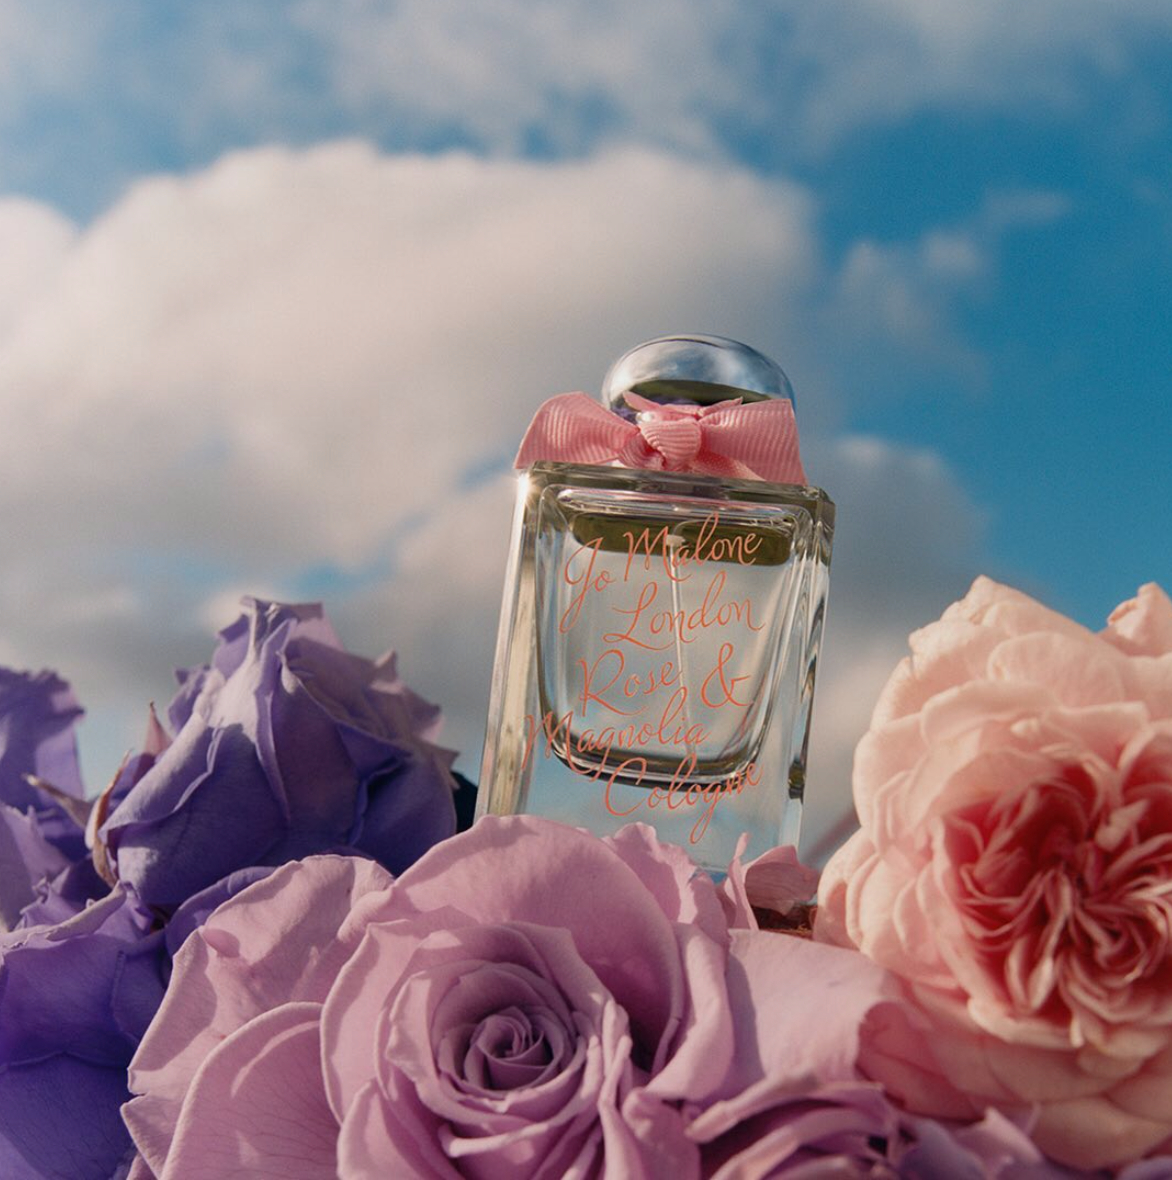 best floral perfumes